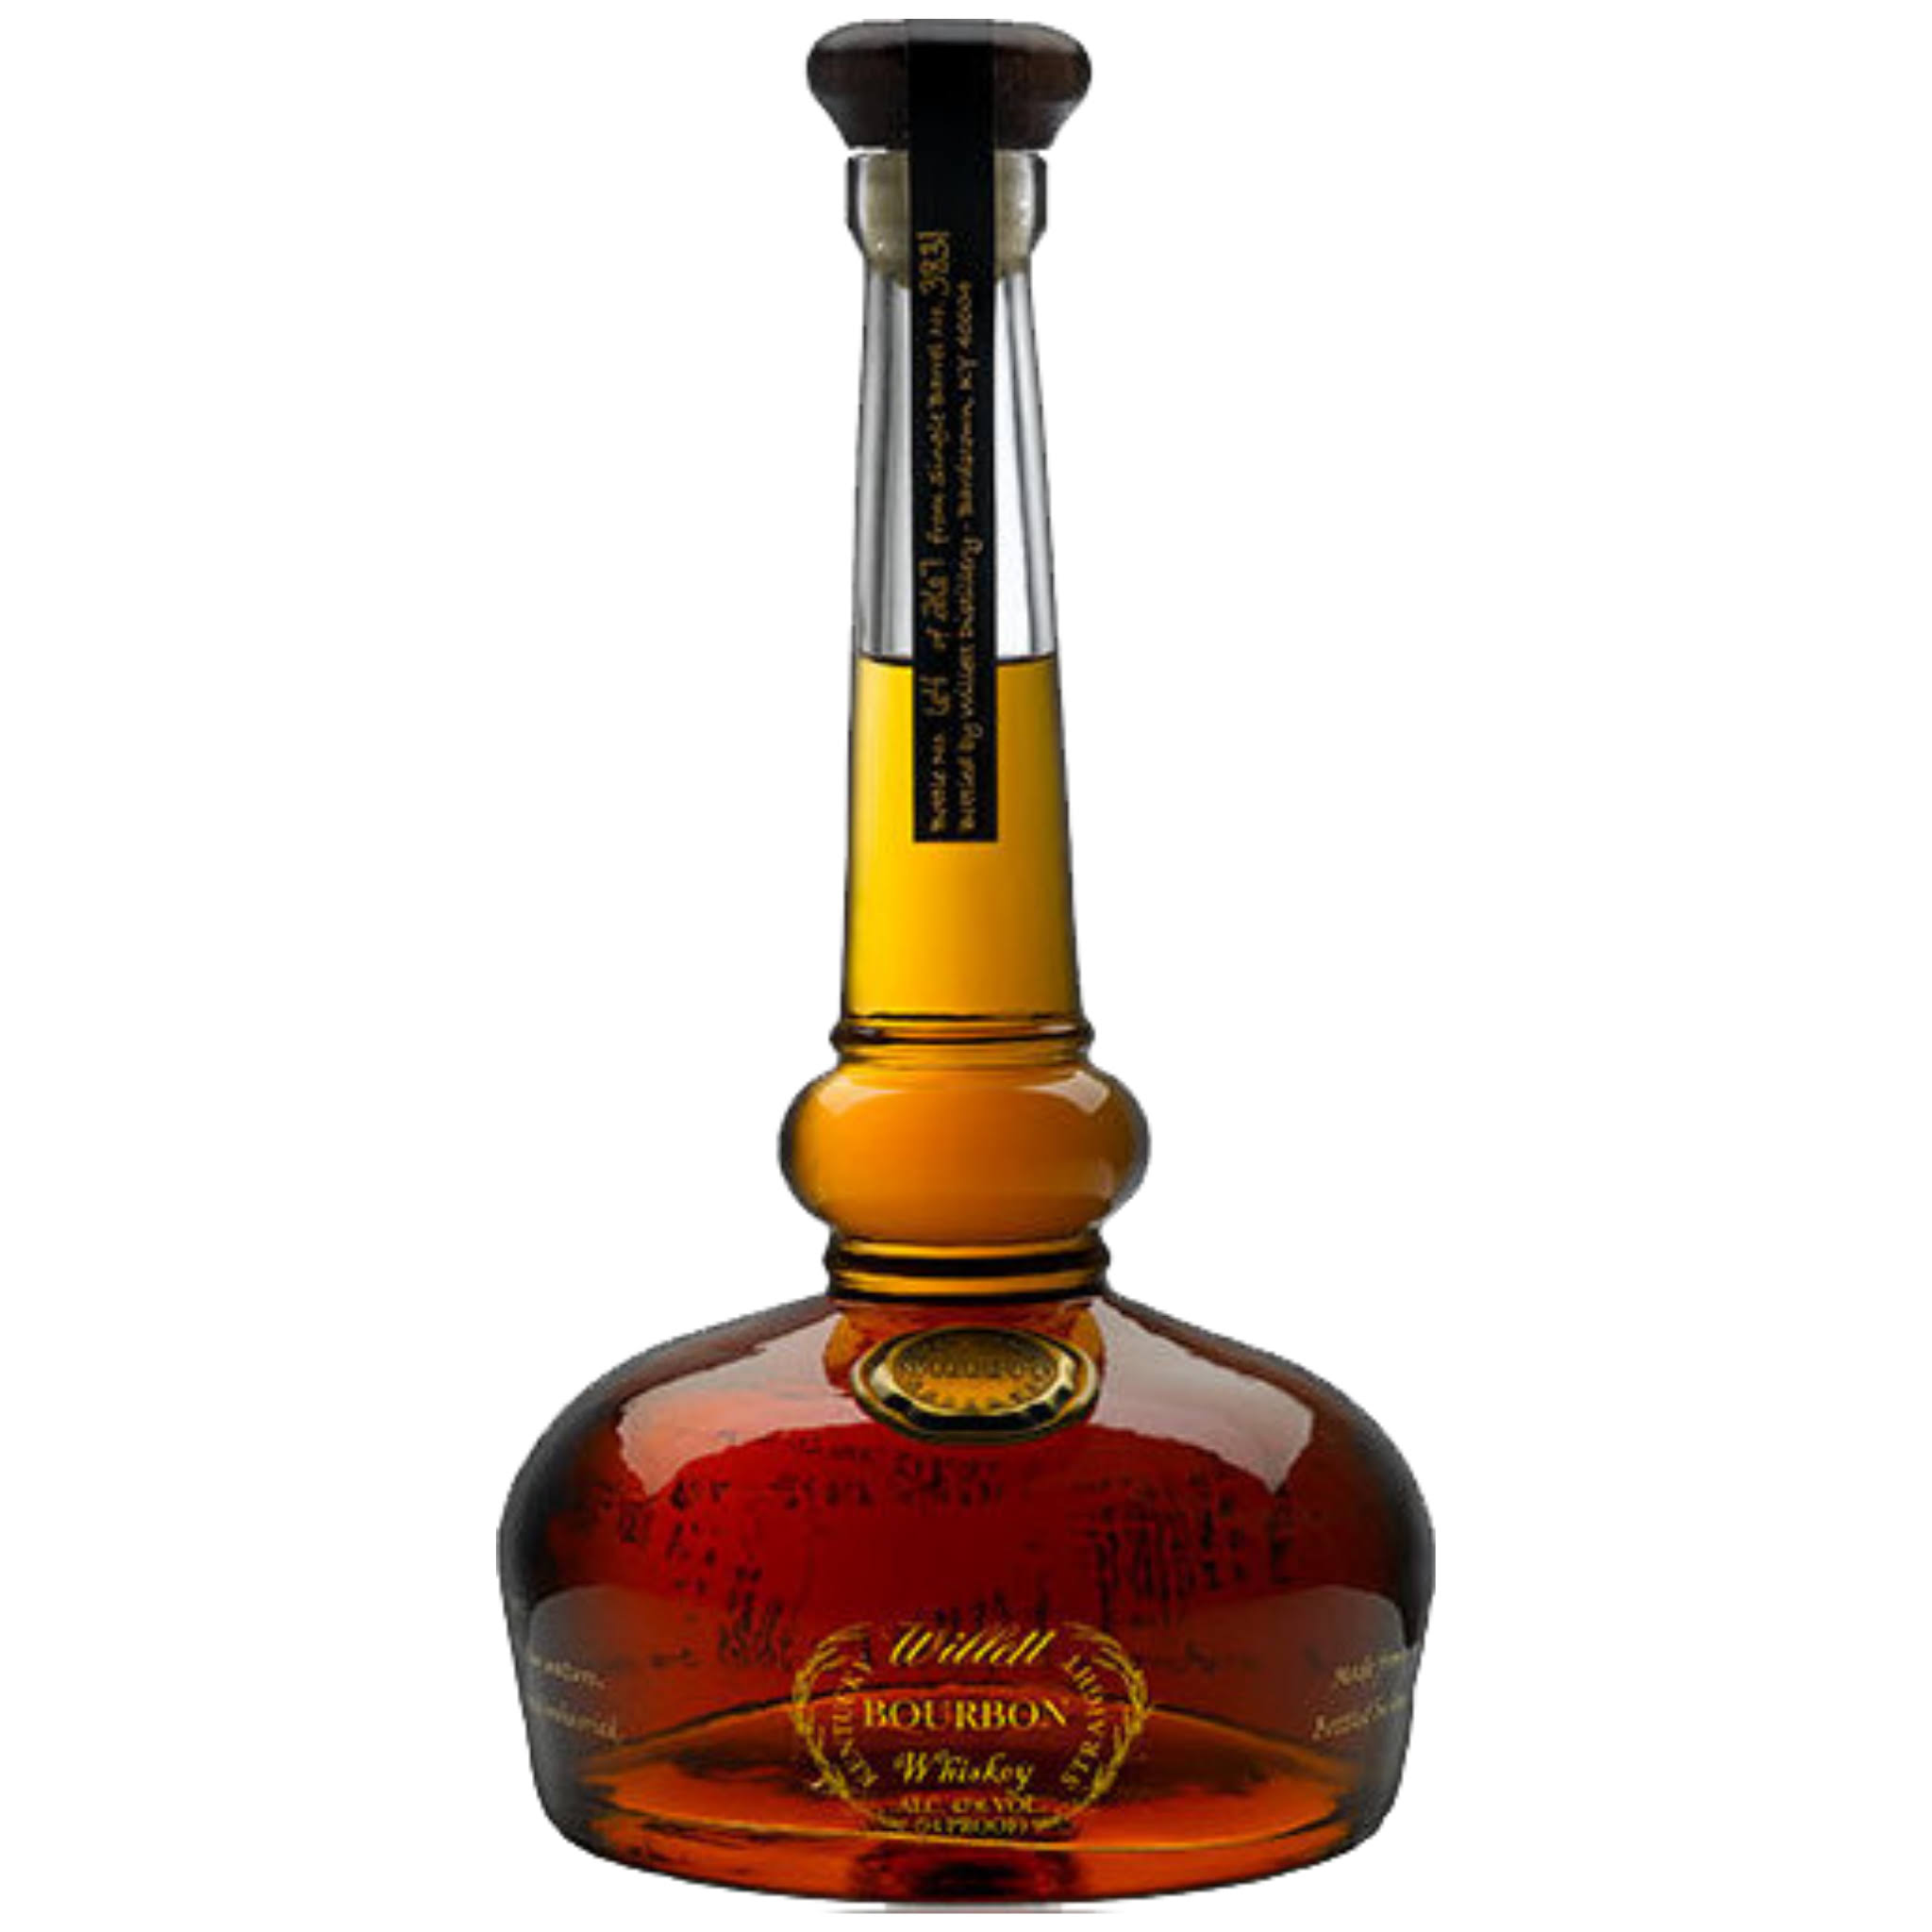 Willet's Pot Still Reserve Bourbon Whisky - 75cl